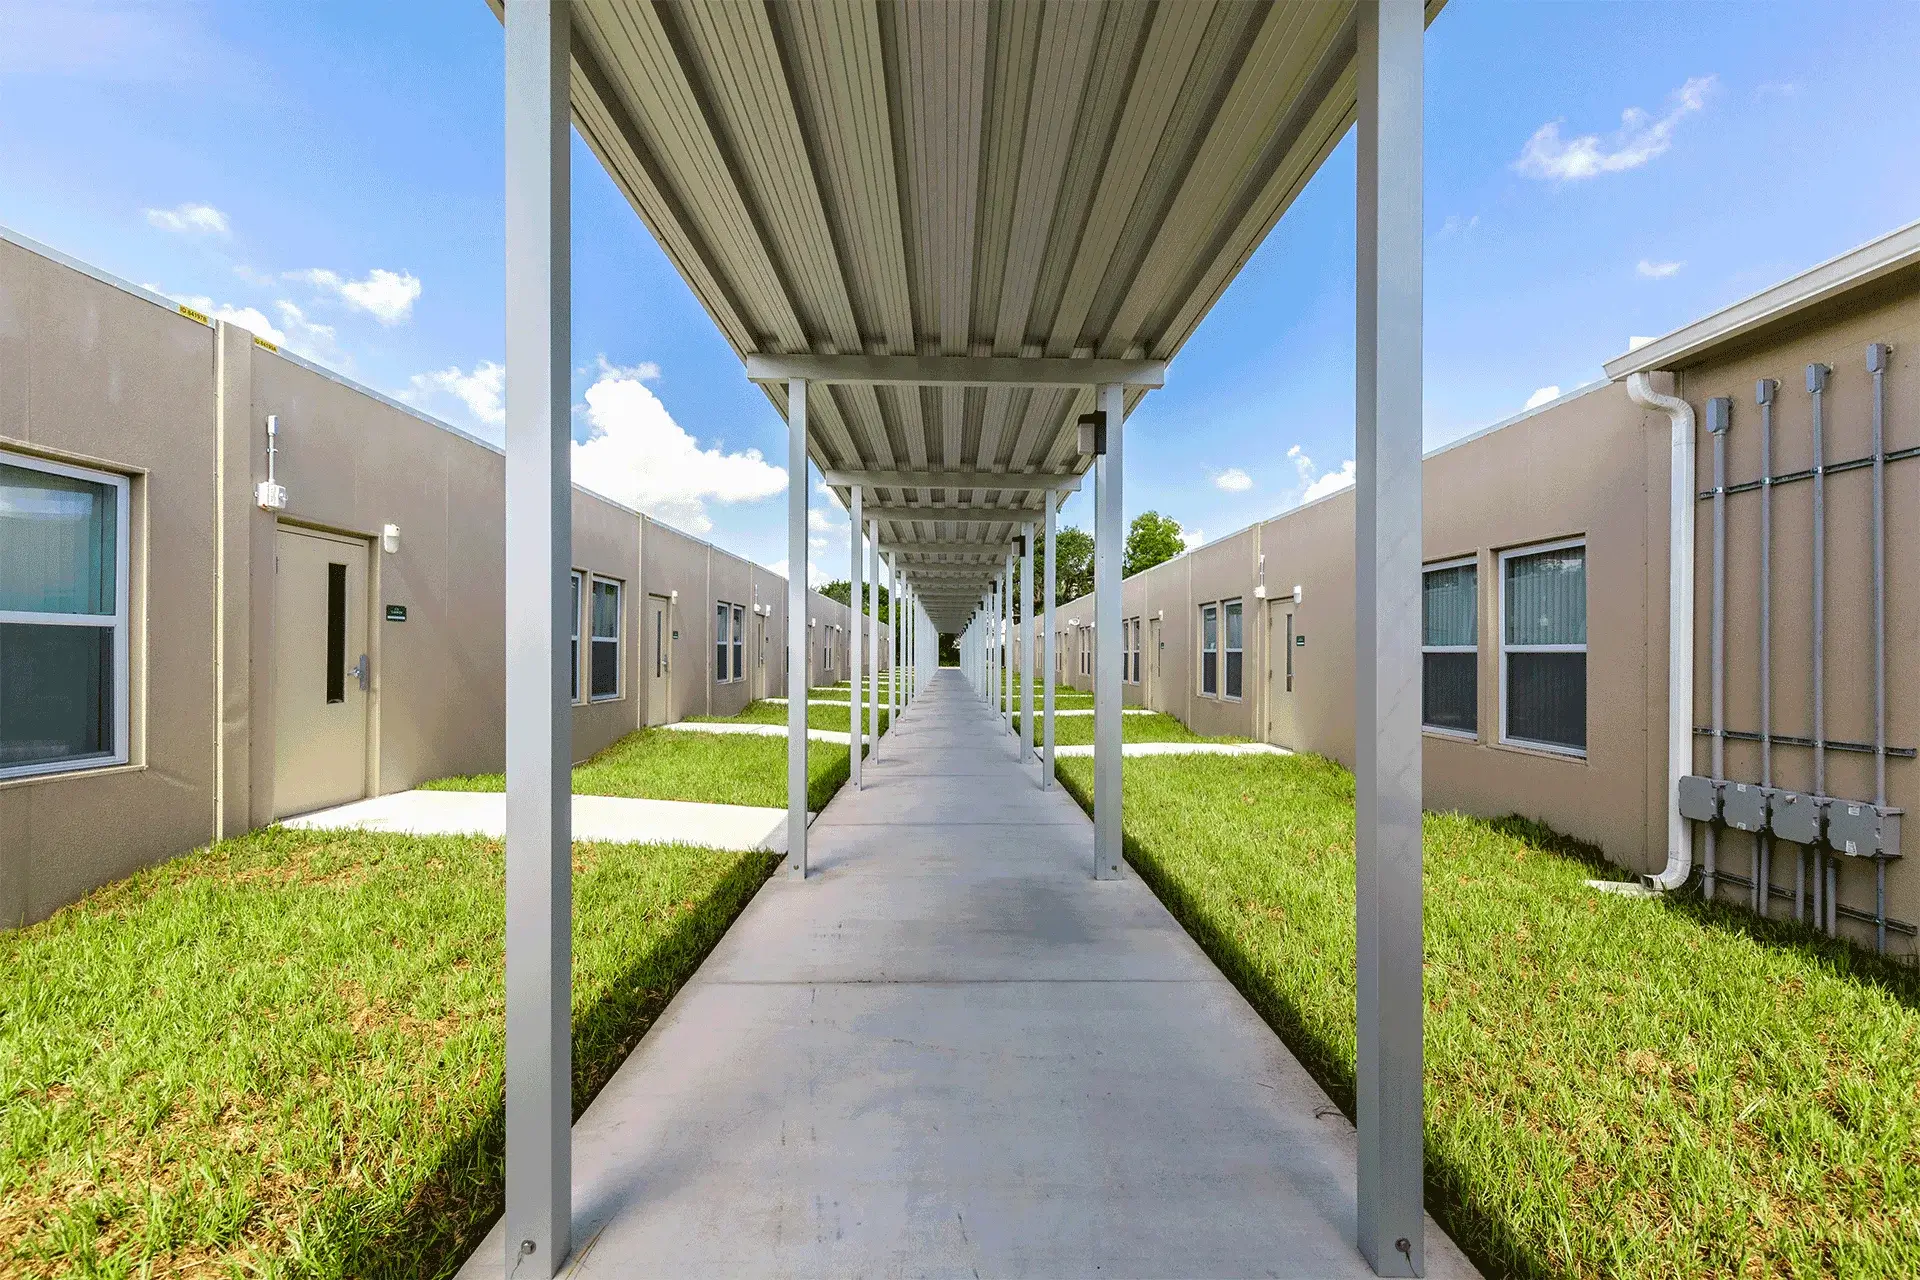 modular school buildings